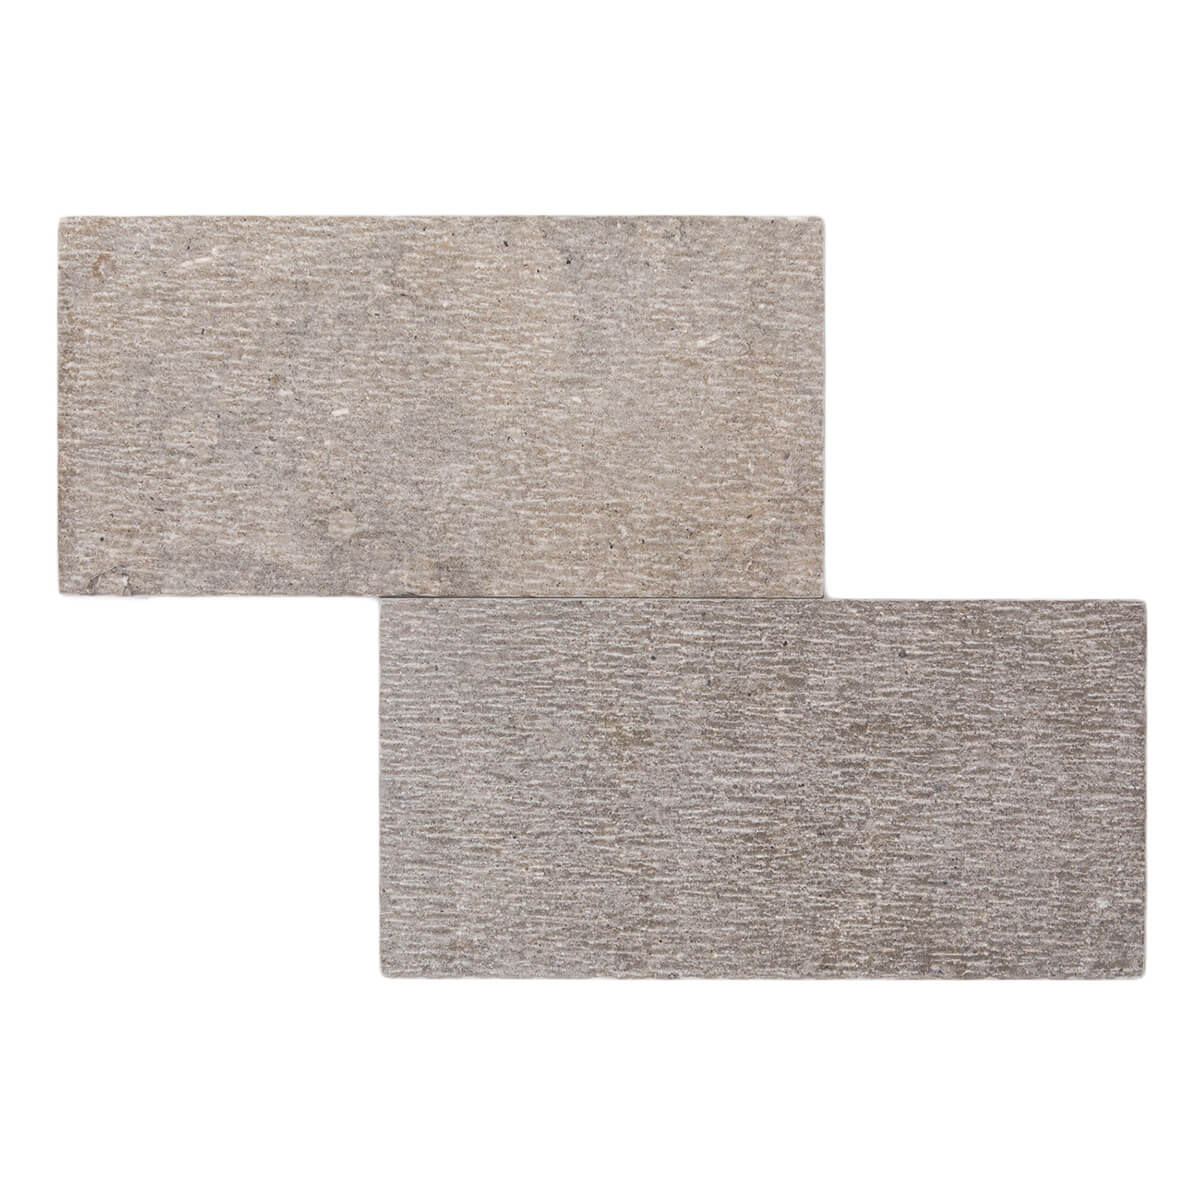 haussmann saint louis limestone rectangle natural stone field tile 6x12 linen